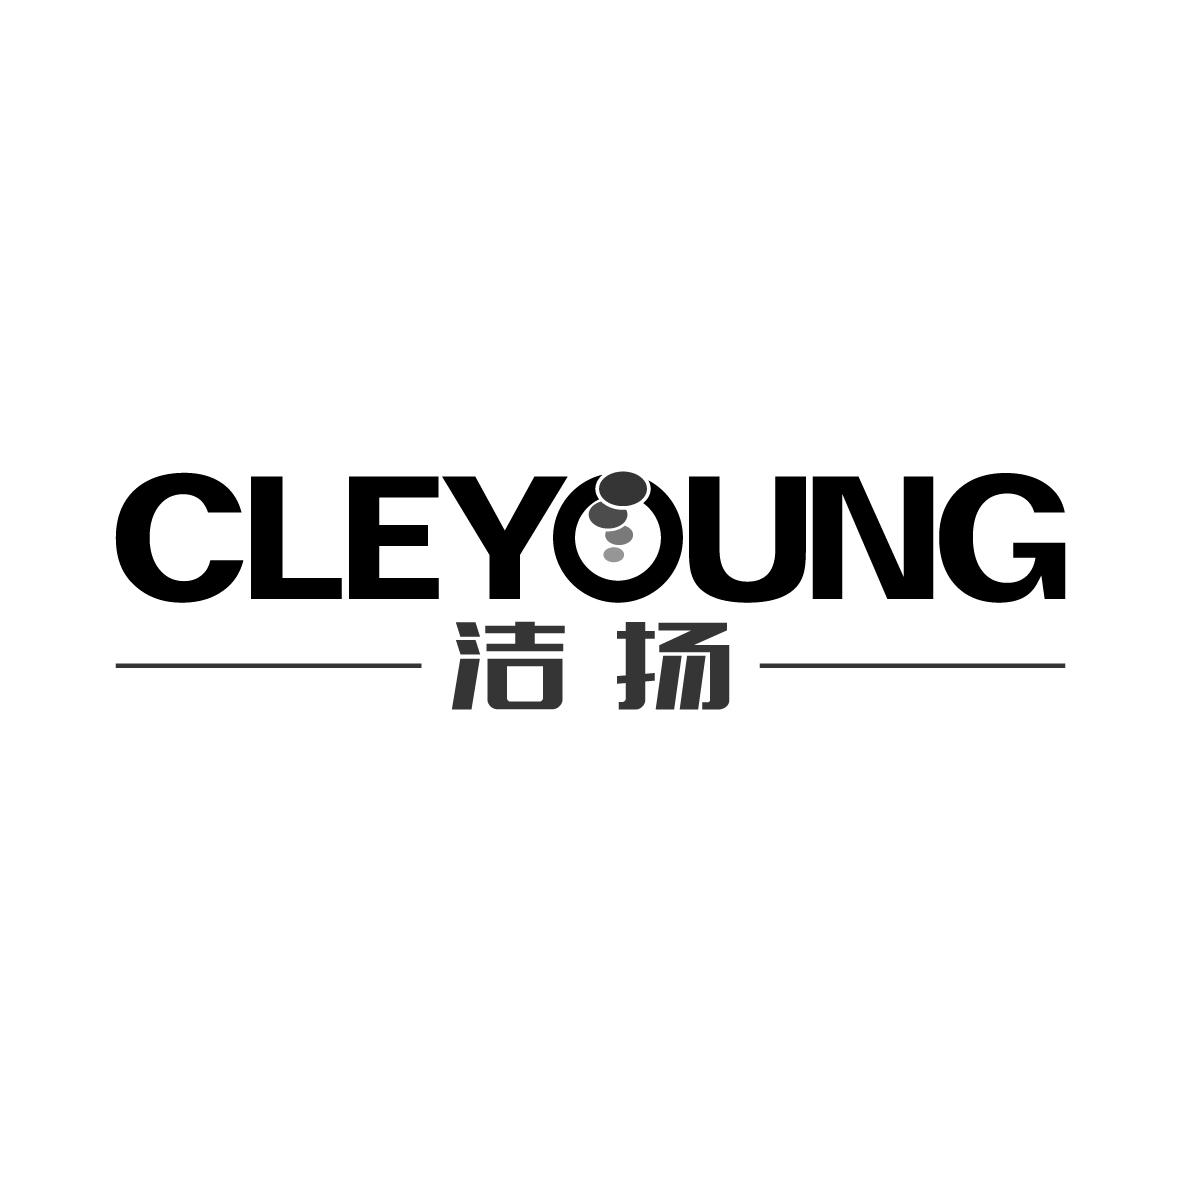  CLEYOUNG